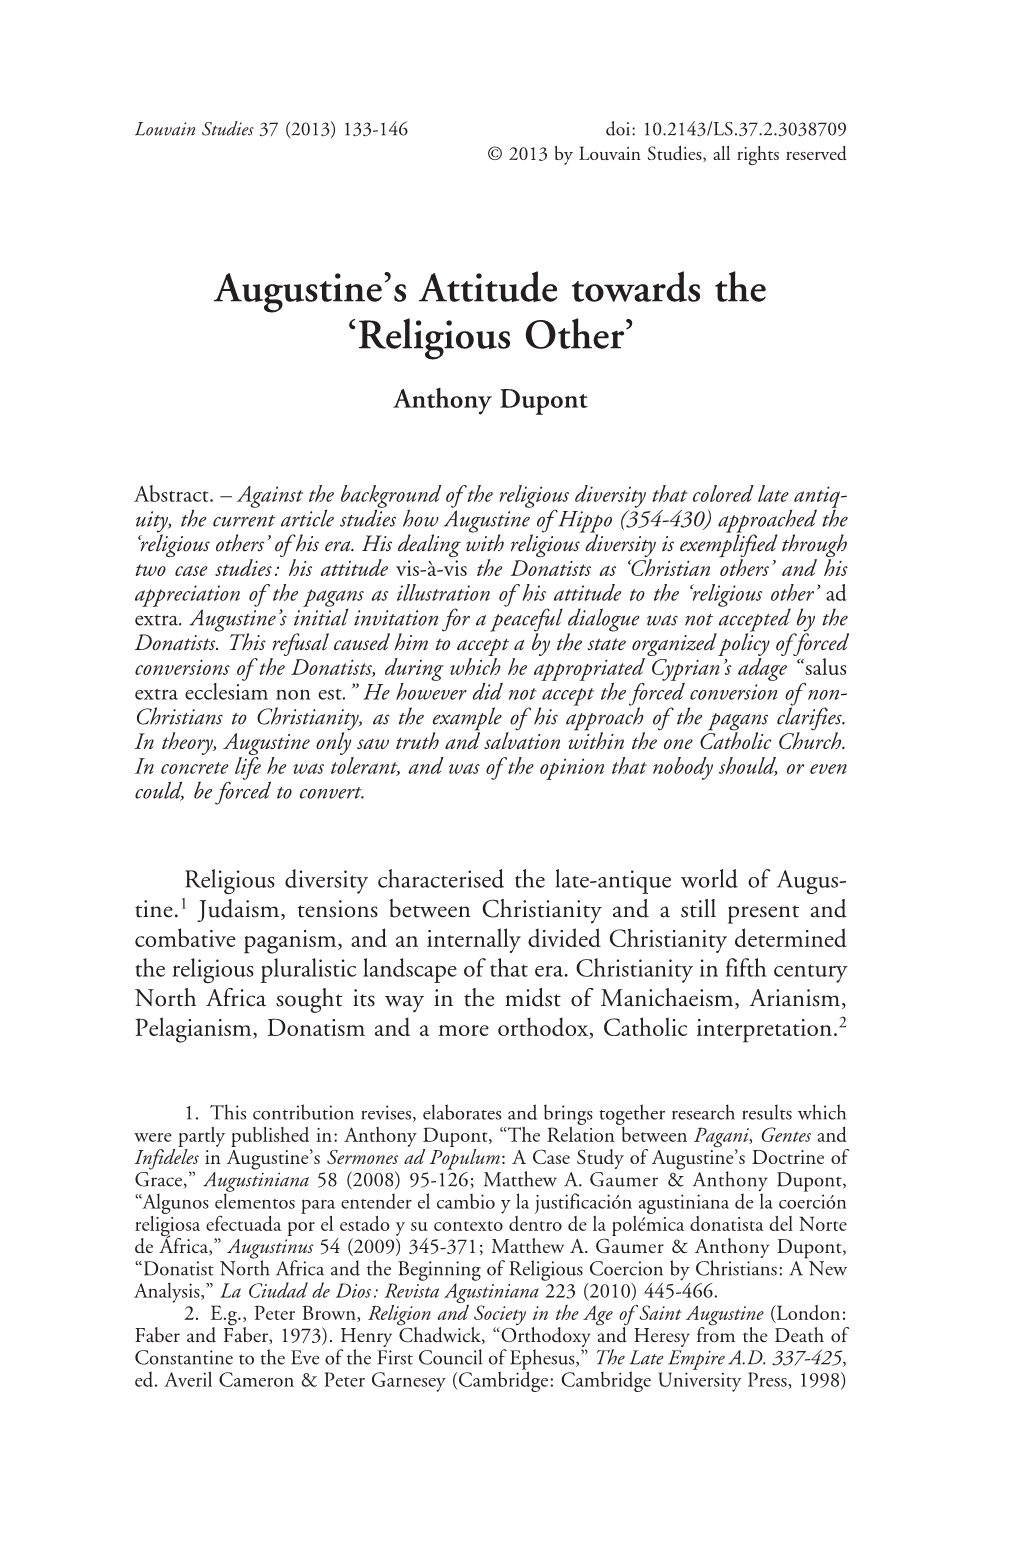 Augustine's Attitude Towards the 'Religious Other'